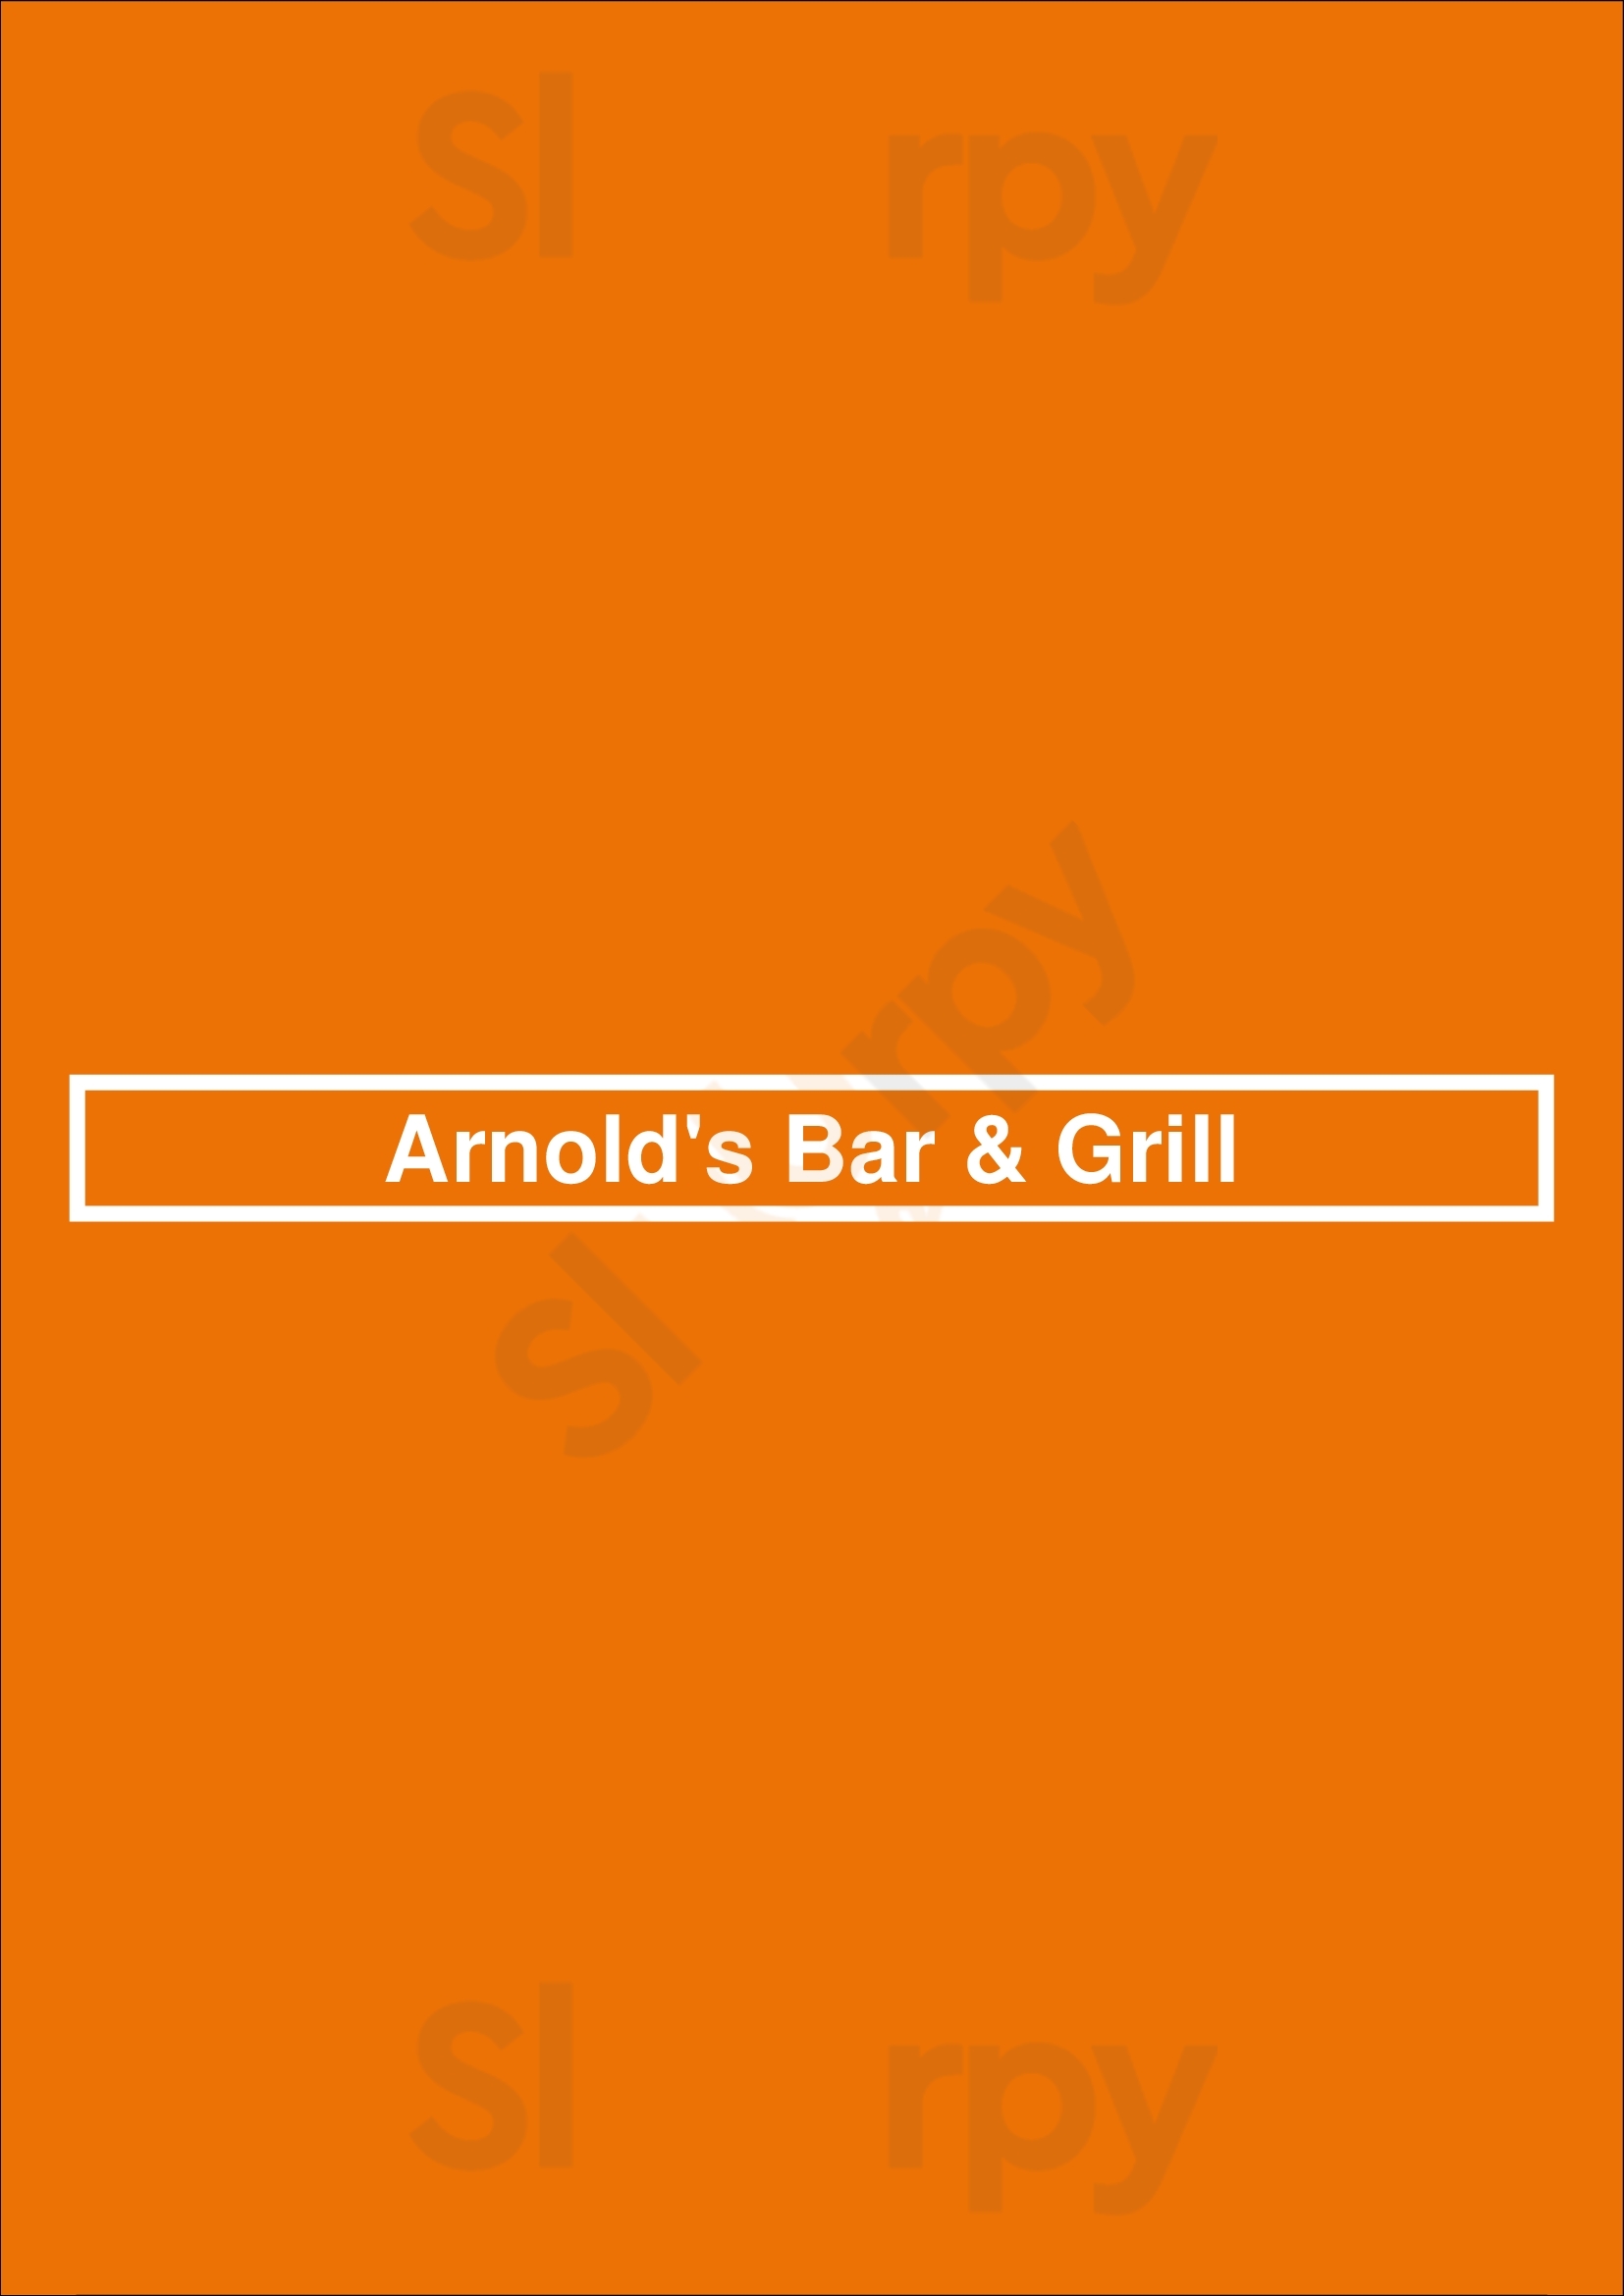 Arnold's Bar & Grill Cincinnati Menu - 1